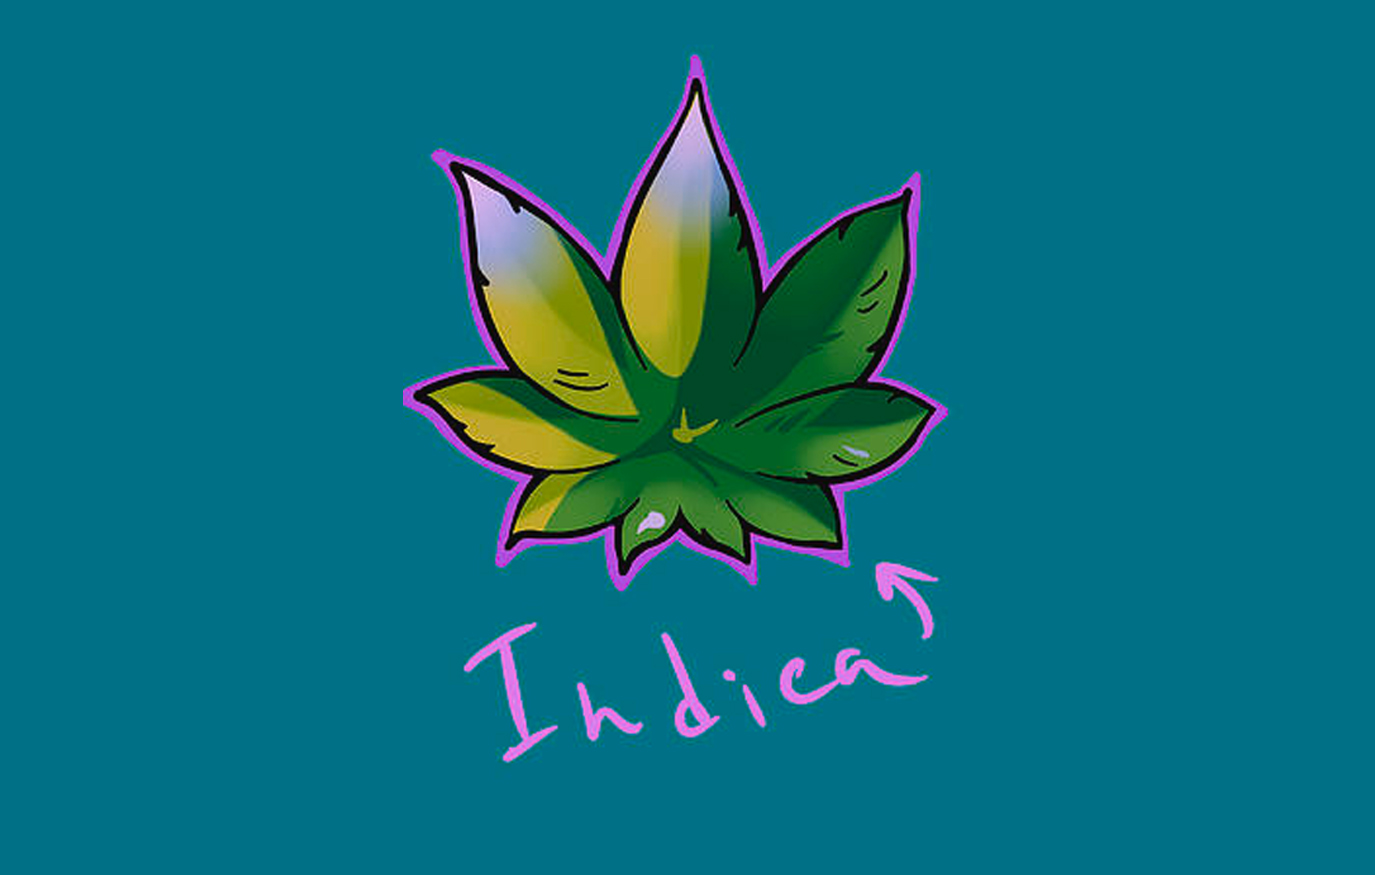 Cannabis Indica Plant